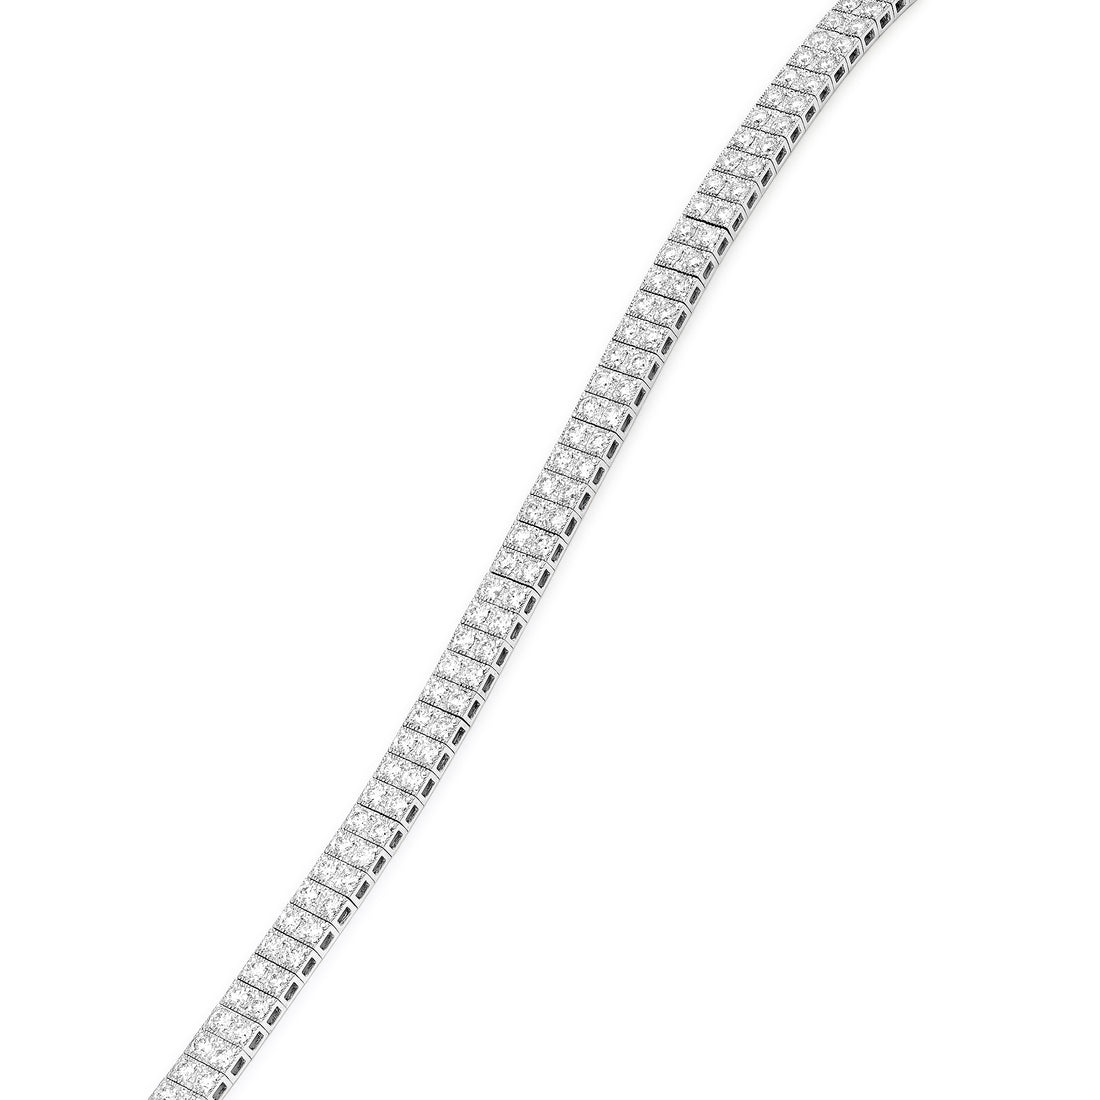 Double Row Tennis Bracelet - 2.71 Carat